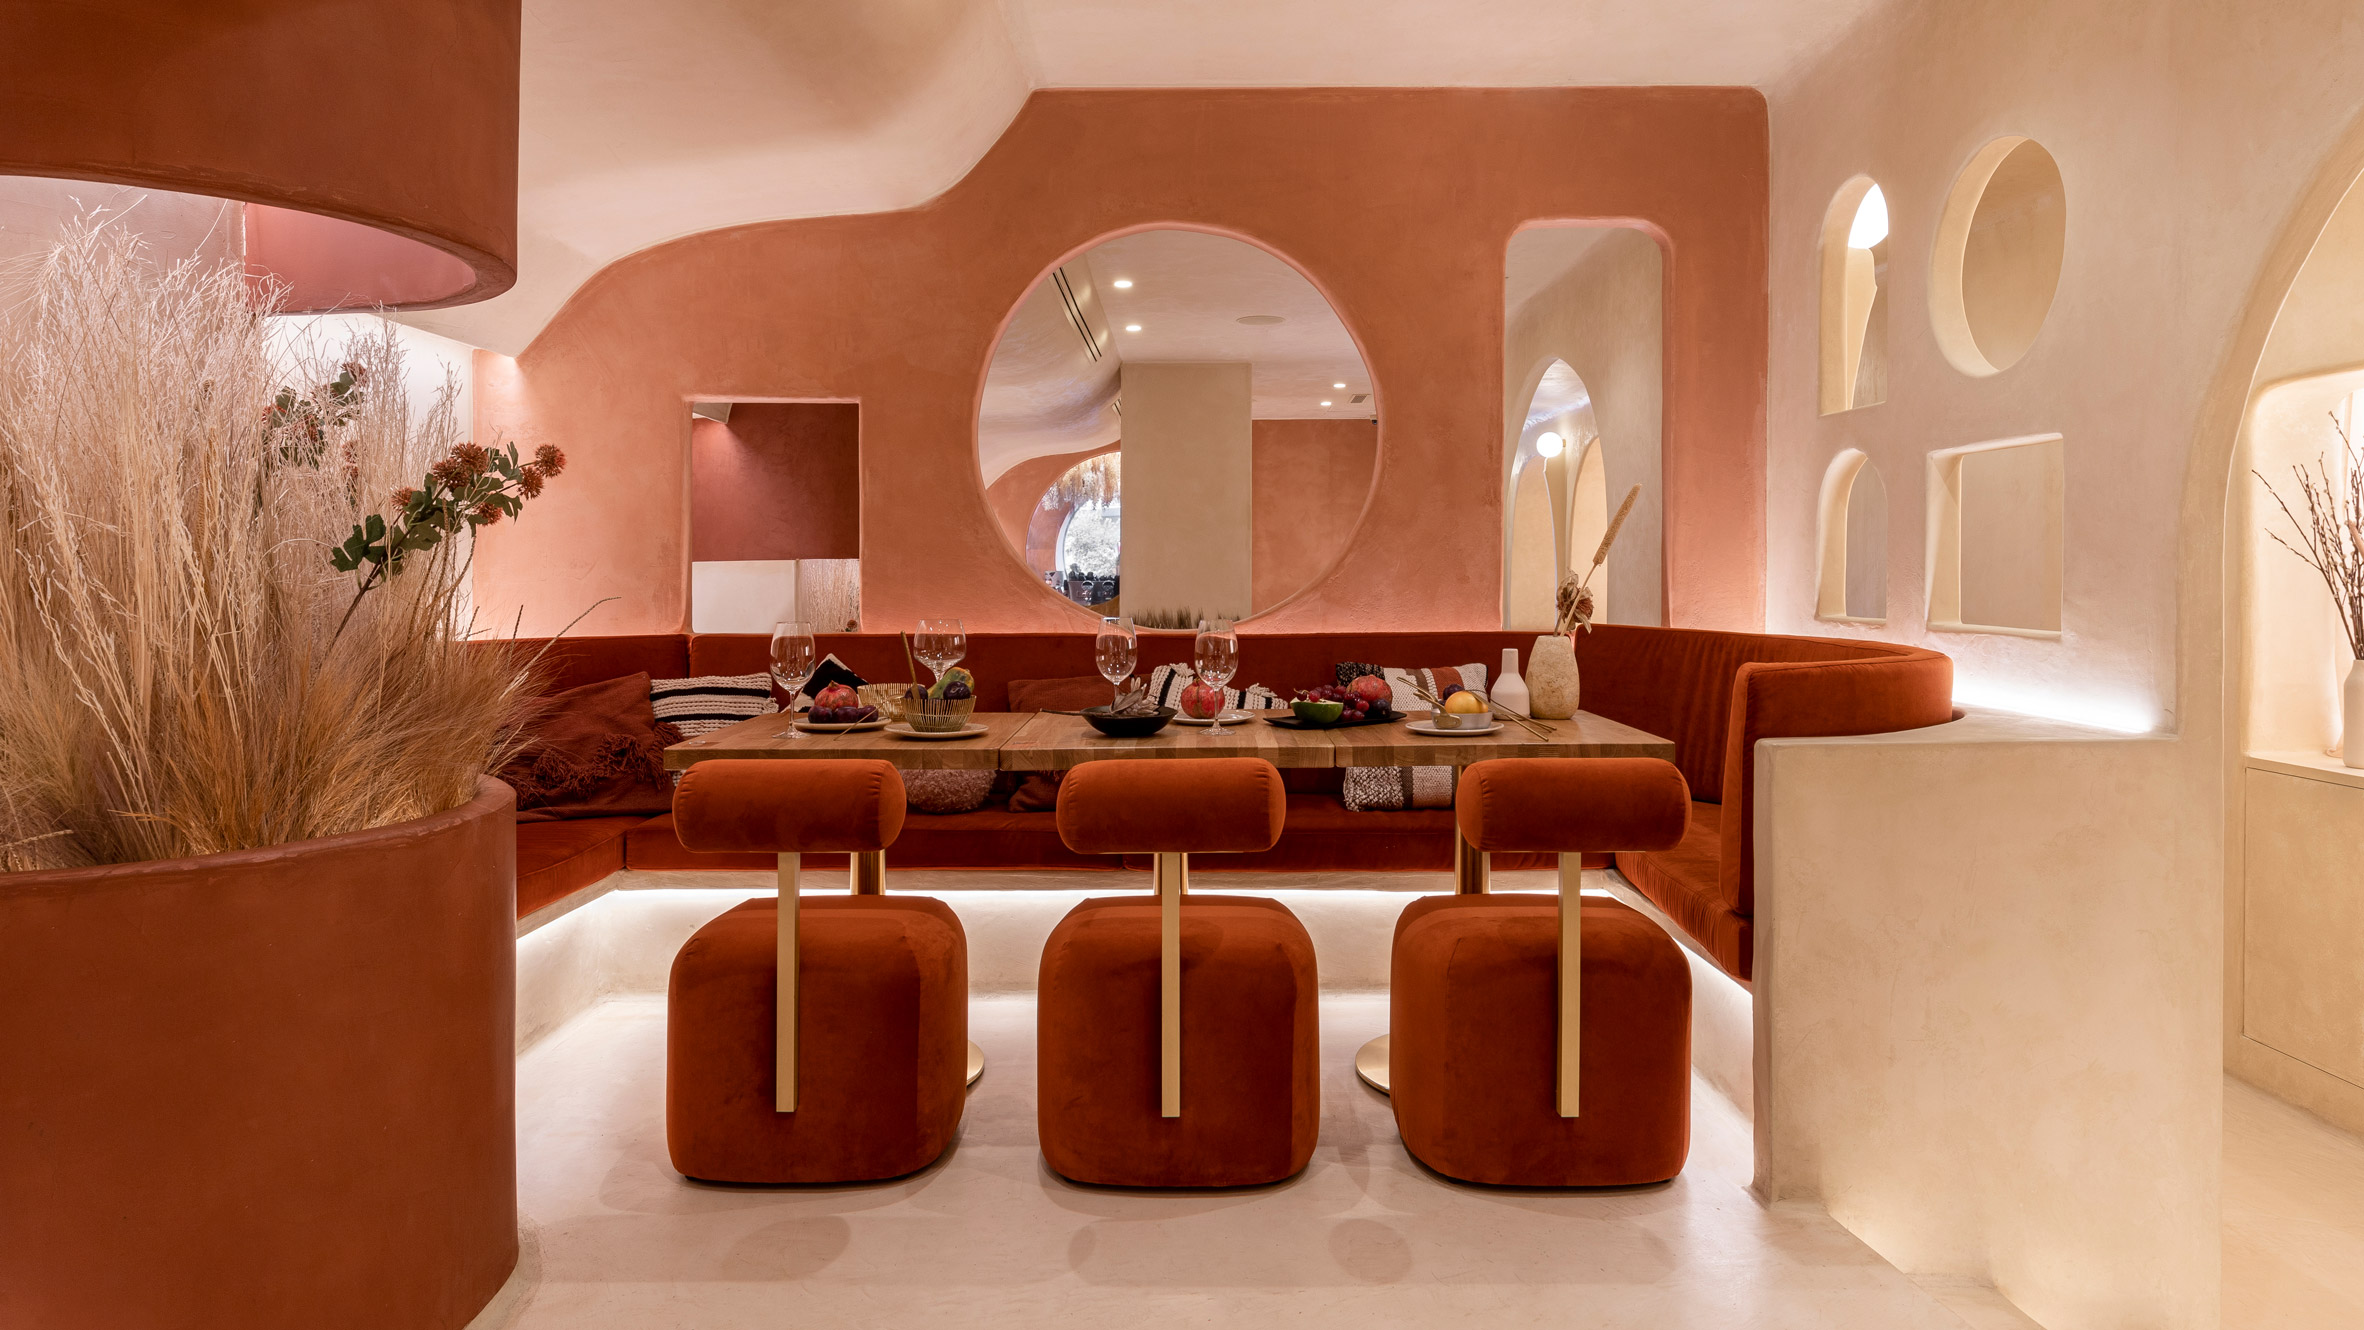 Masquespacio creates an adobe-inspired restaurant interior.